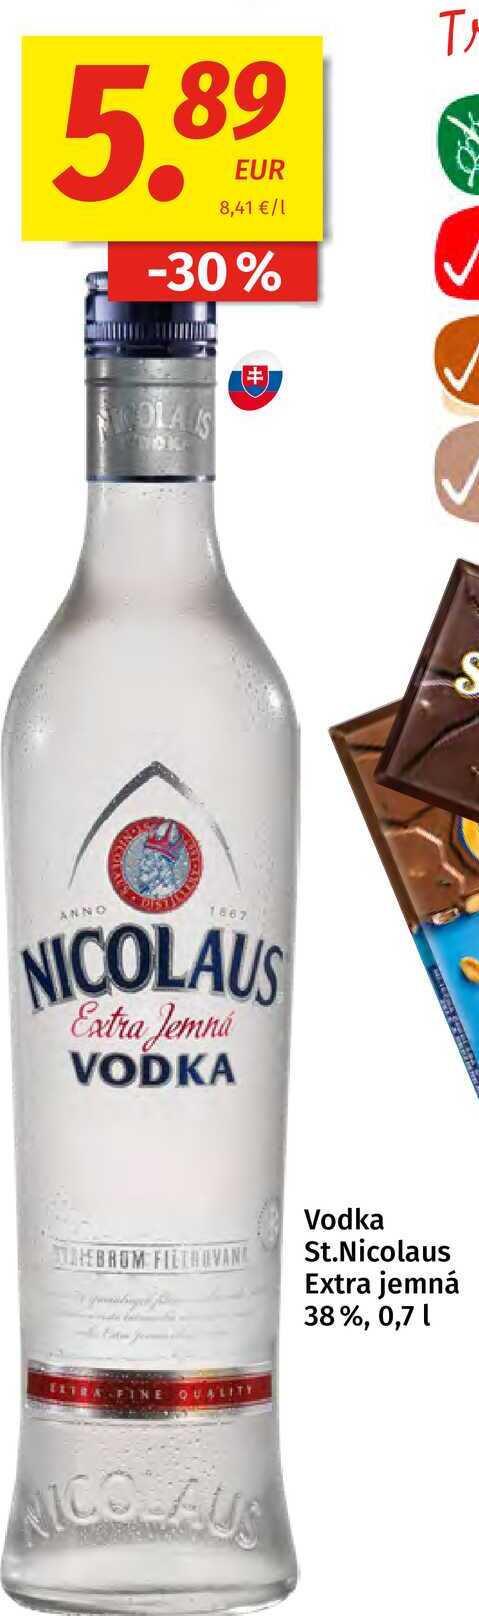 Vodka St.Nicolaus Extra jemná 38%, 0,7l